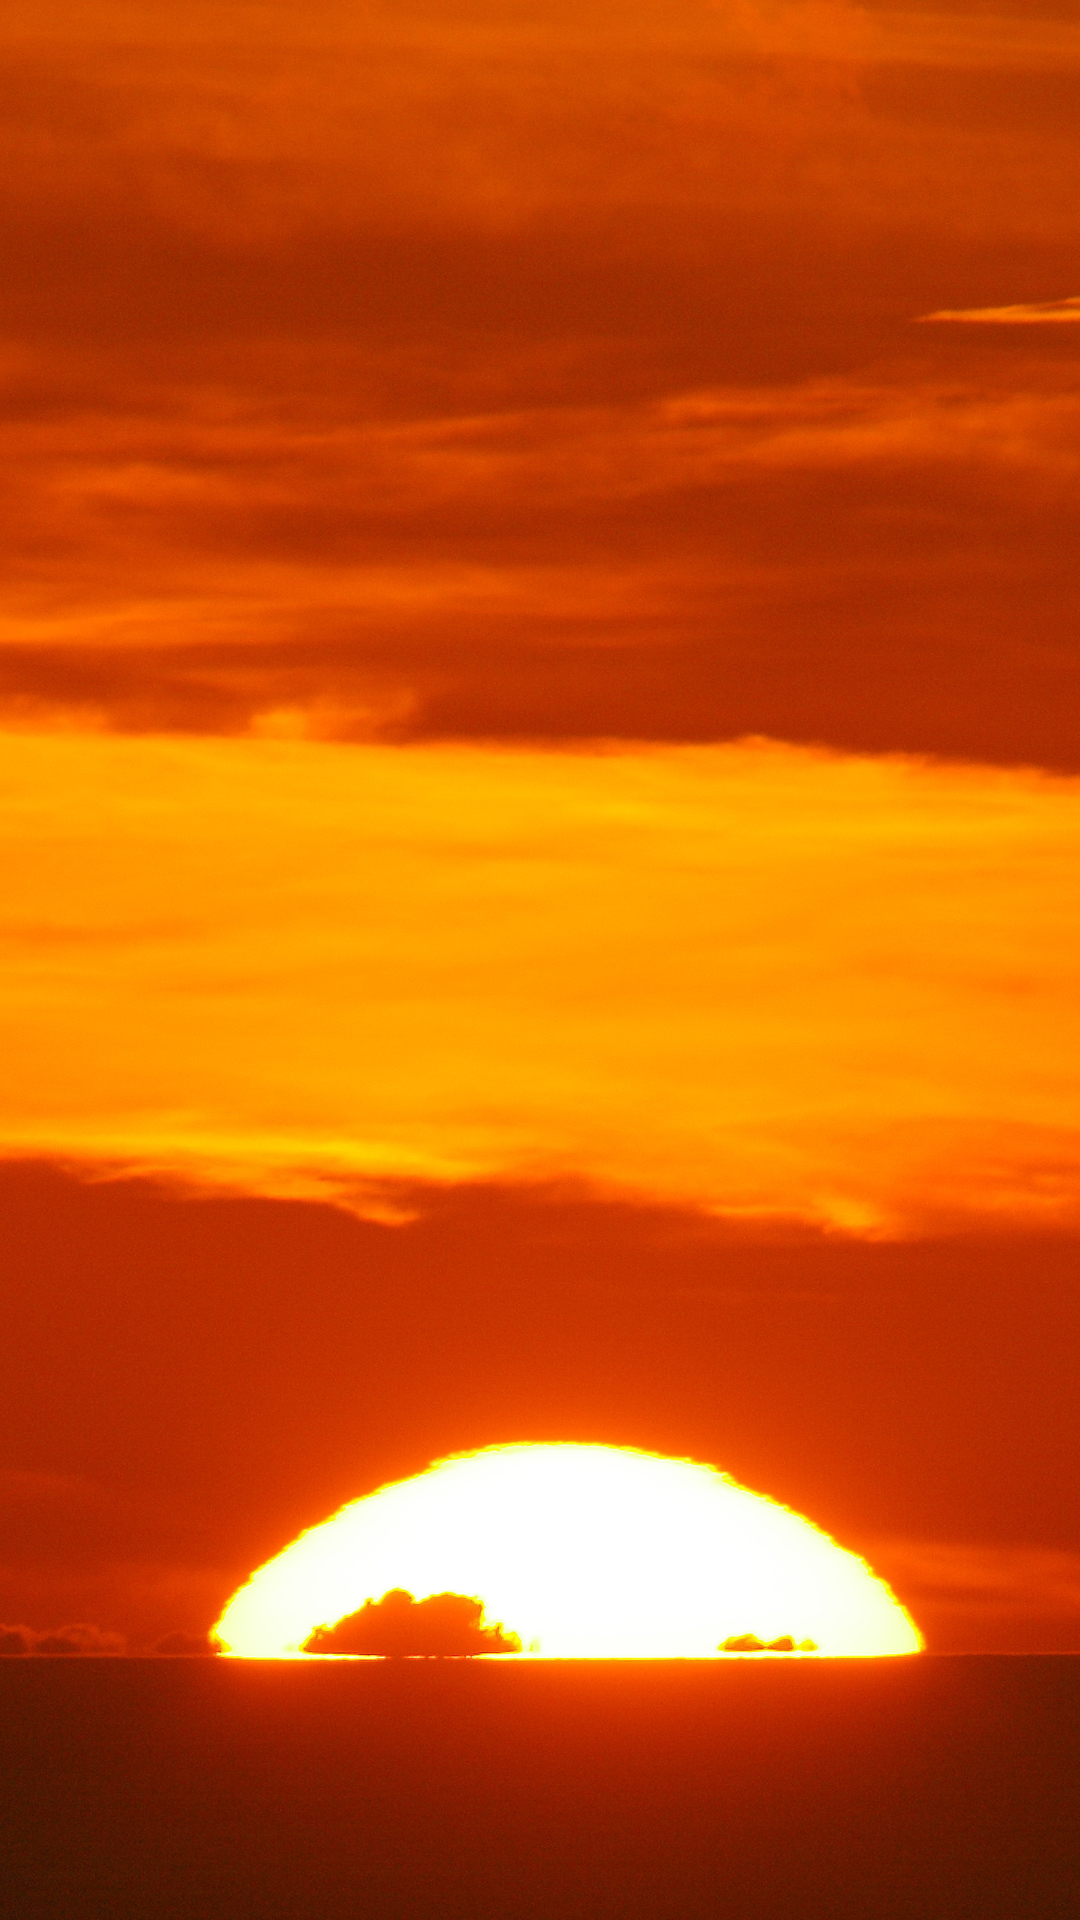 orange wallpaper iphone,sky,afterglow,red sky at morning,horizon,heat